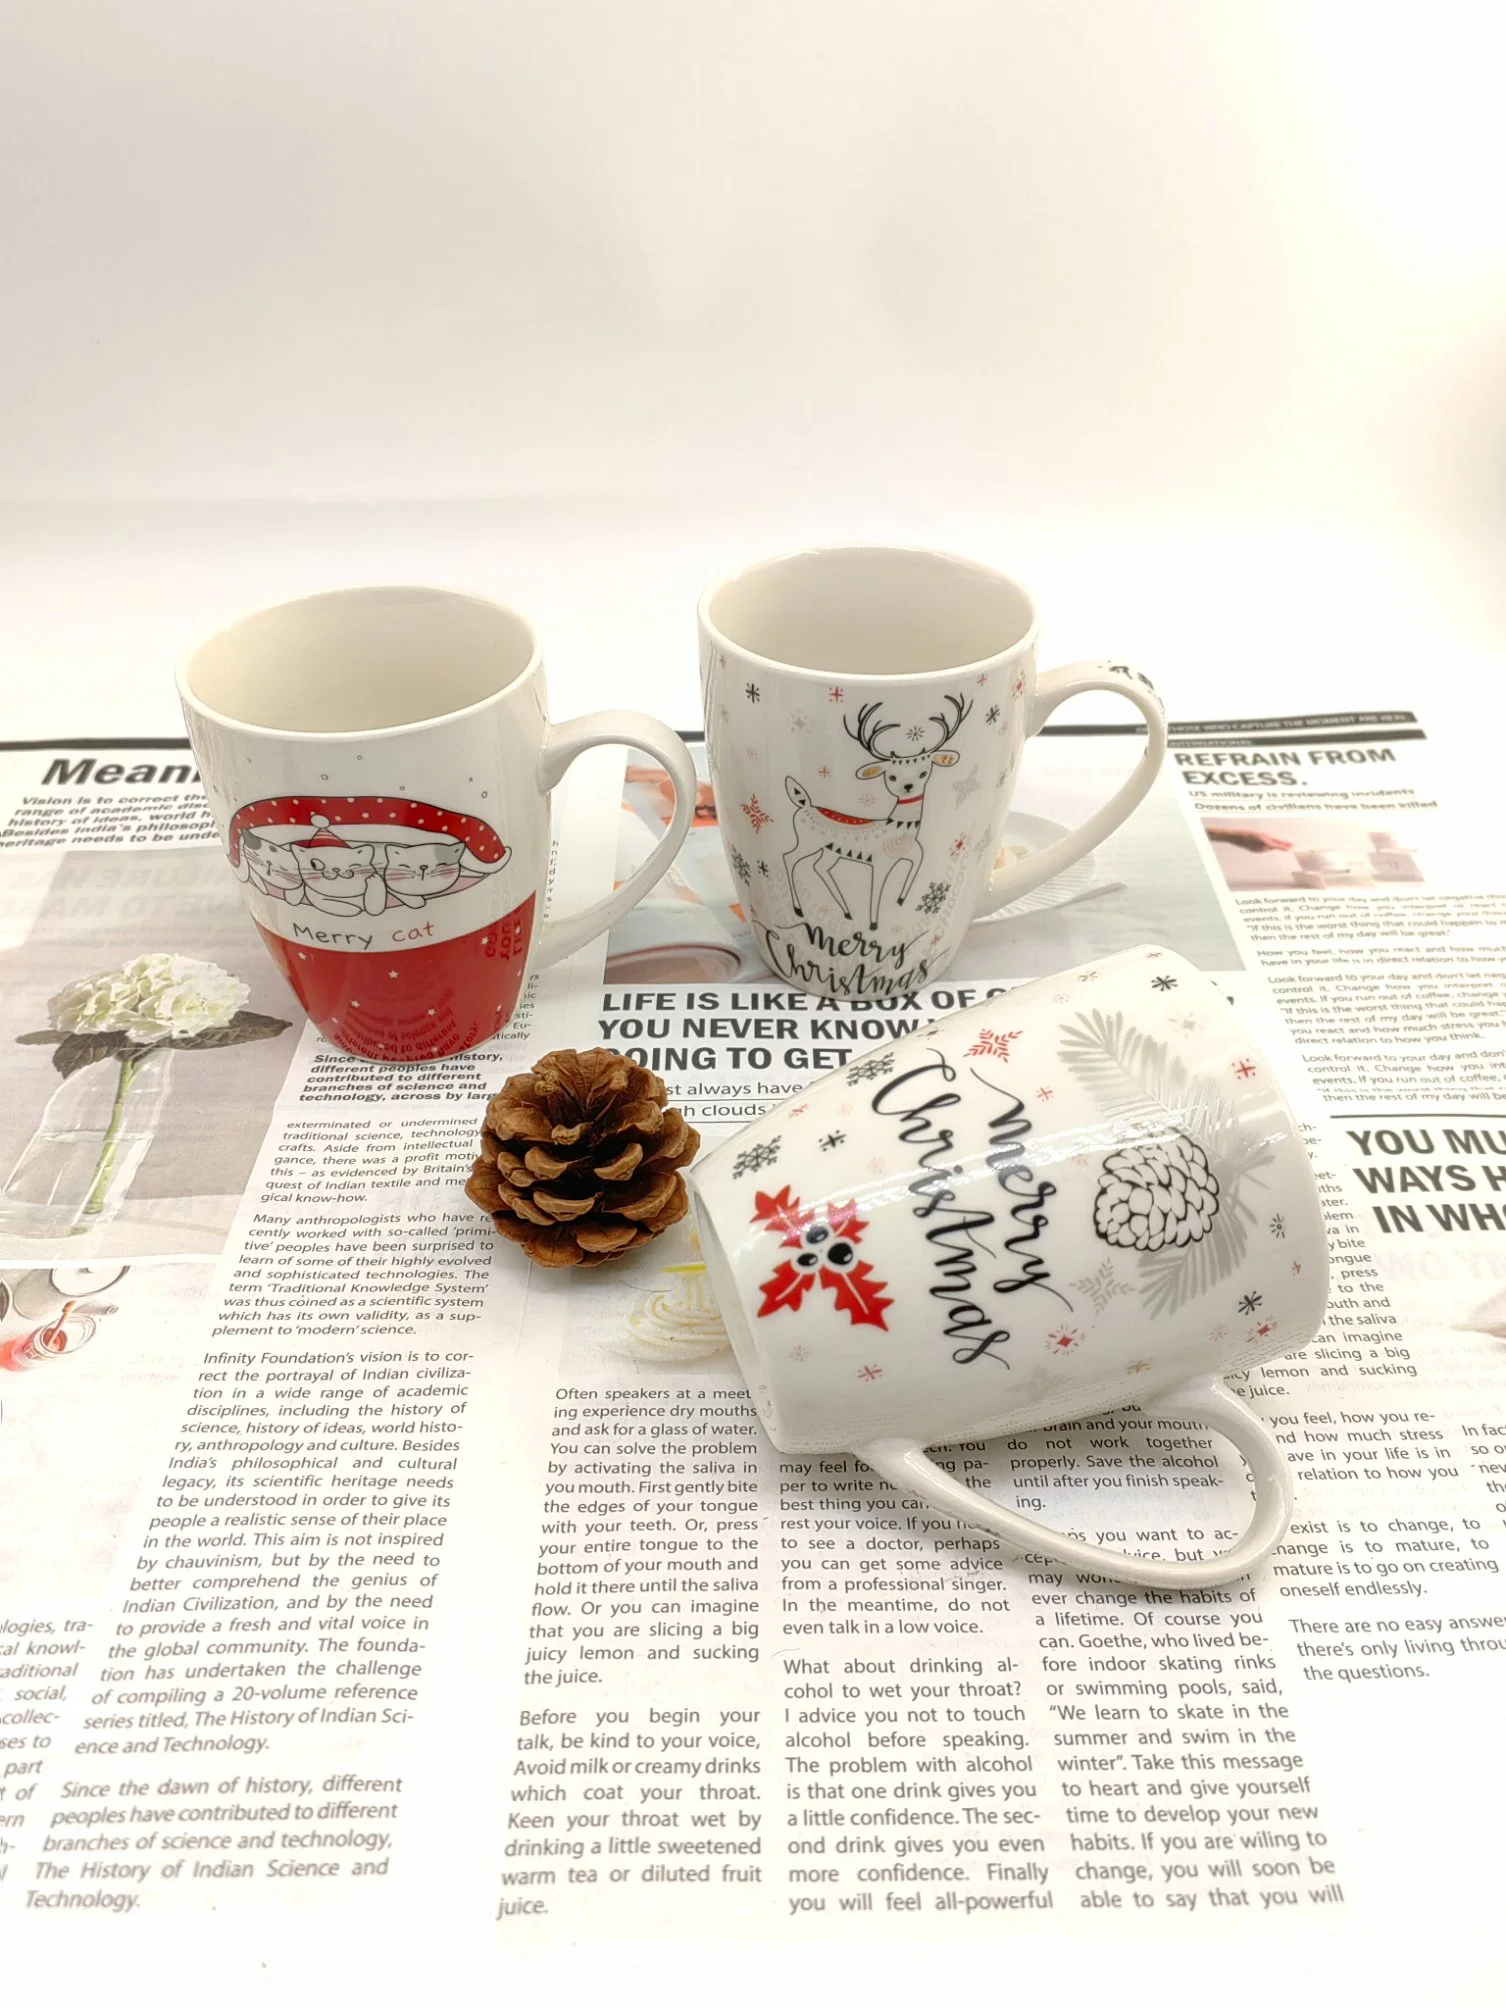 New Bone China Ceramic Decals Mugs Merry Christmas Gift Coffee Mug Porcelain Tea Cups